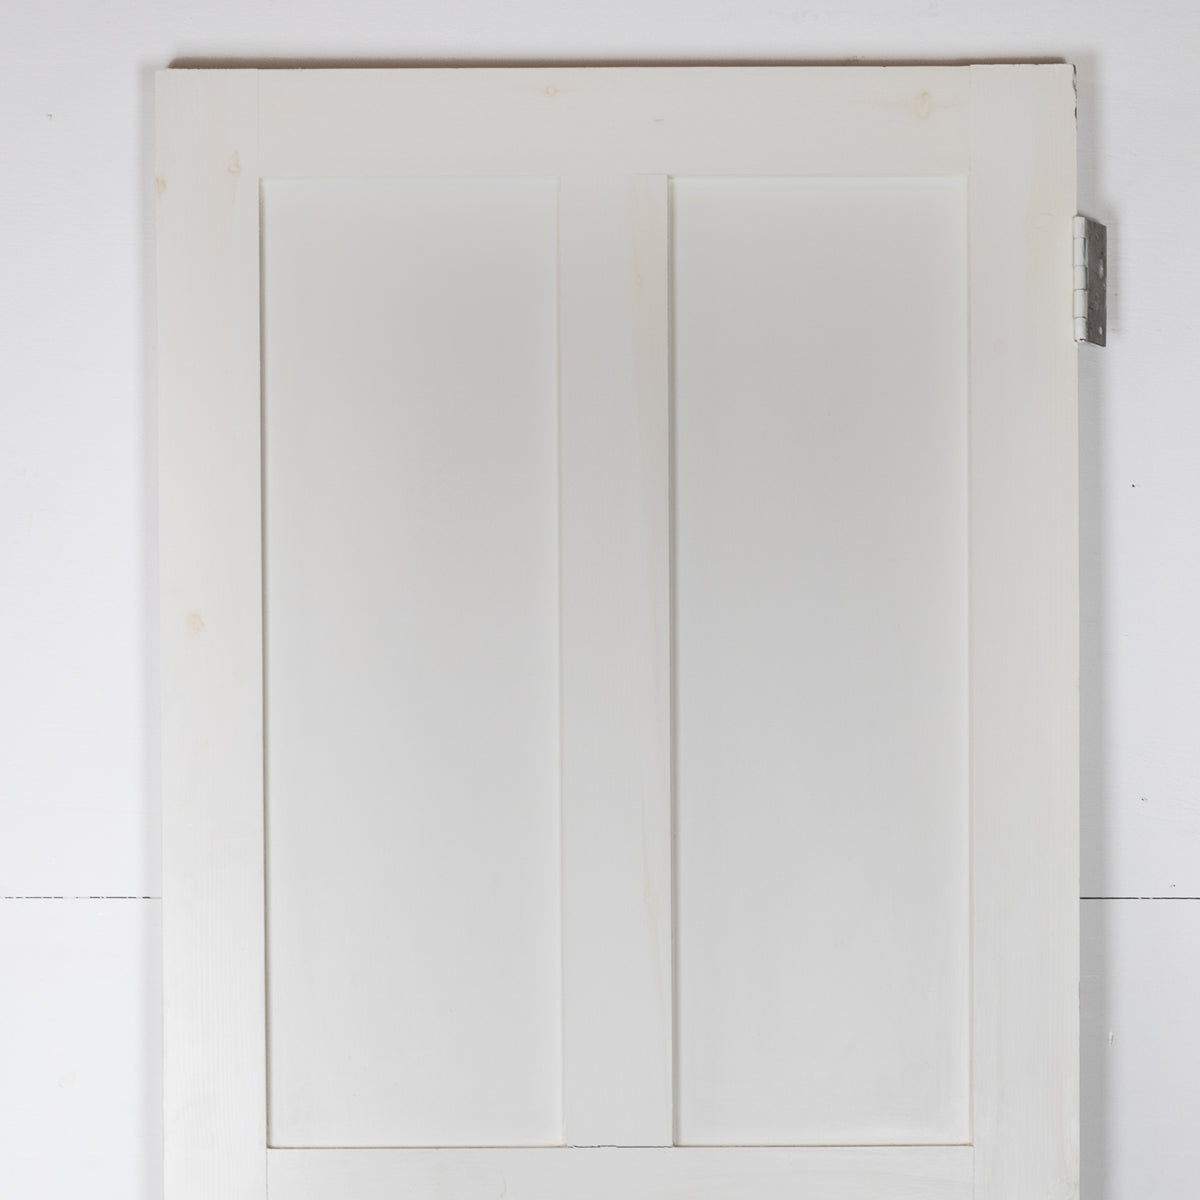 Antique Victorian 4 Panel Door - 191.5 x 76cm | The Architectural Forum